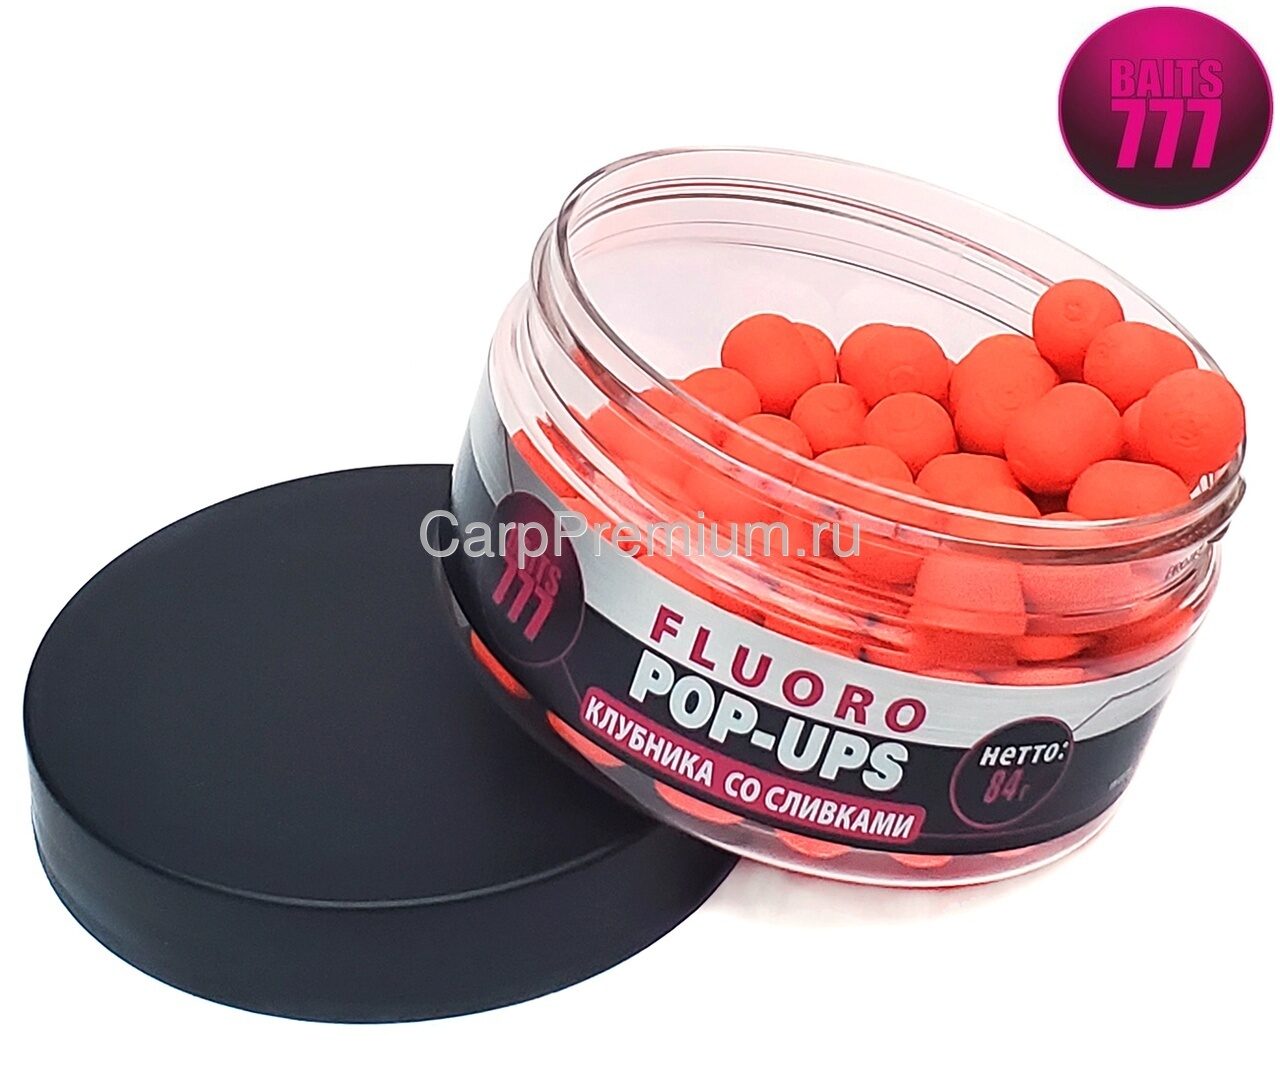 Бойлы дамбелсы плавающие 12 х 14 мм Клубника со сливками 777 Baits (Лихоносовы) - Likhonosov Dumbbells Strawberry Cream Fluoro Pop-Up